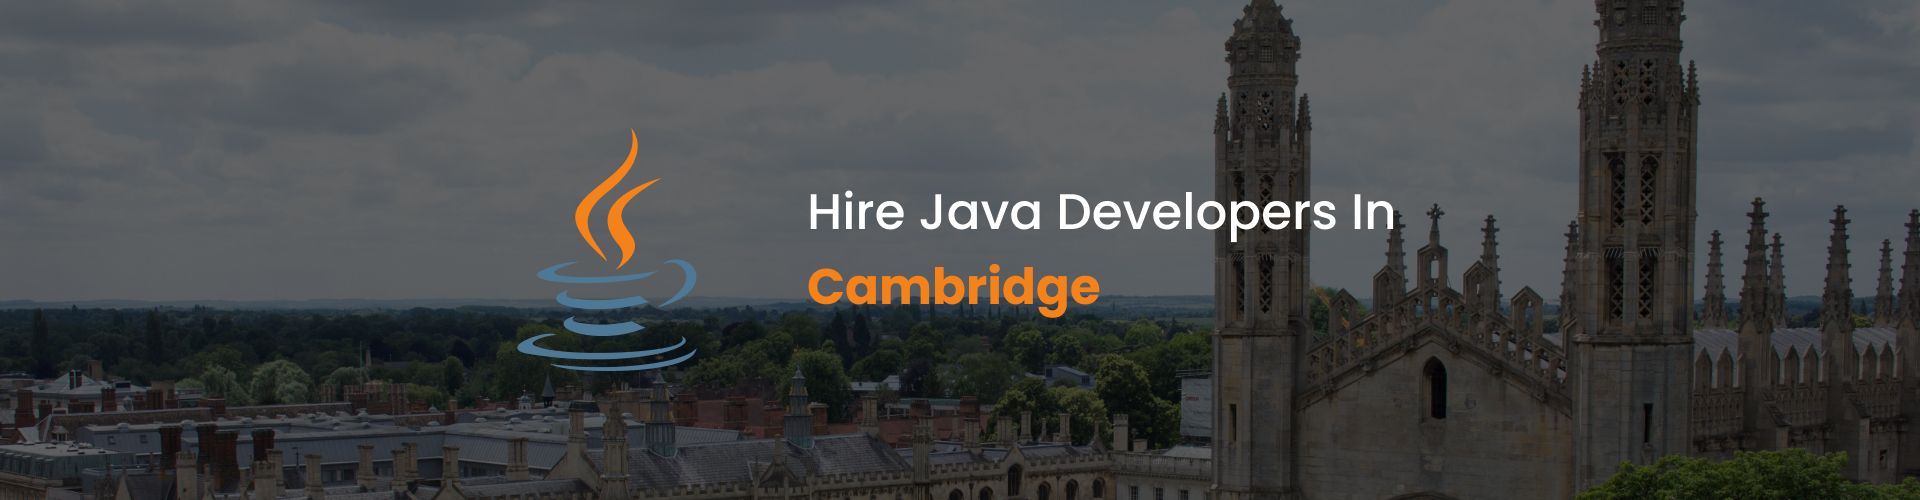 hire java developers in cambridge